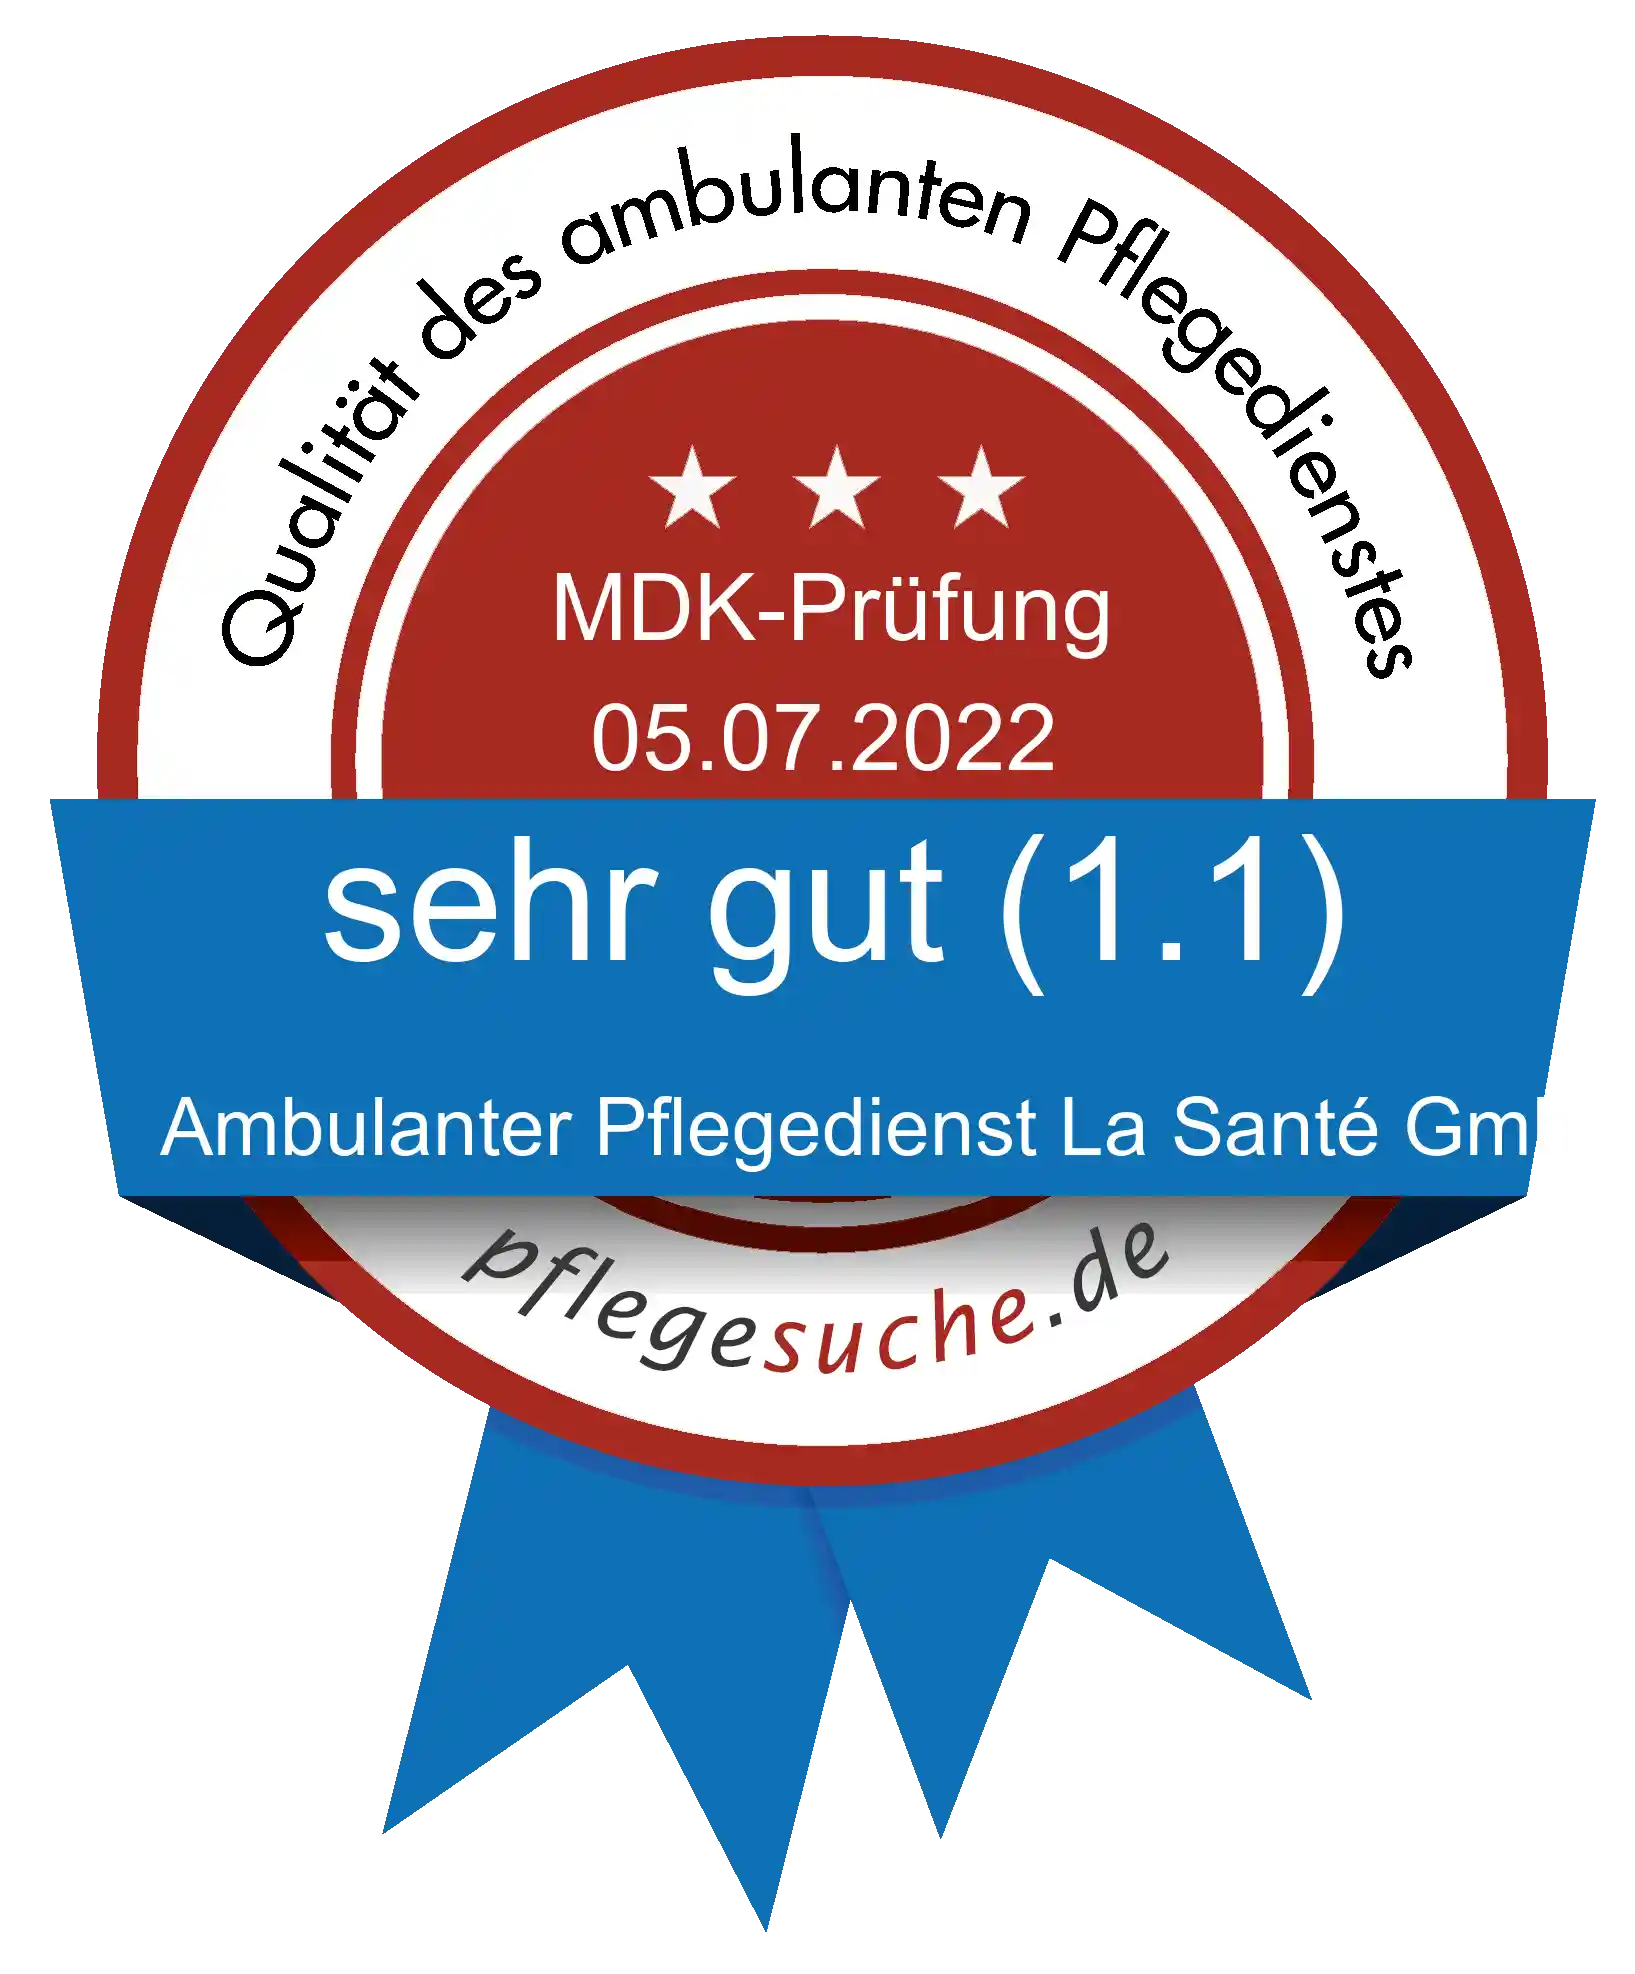 Siegel Benotung: Ambulanter Pflegedienst La Santé GmbH